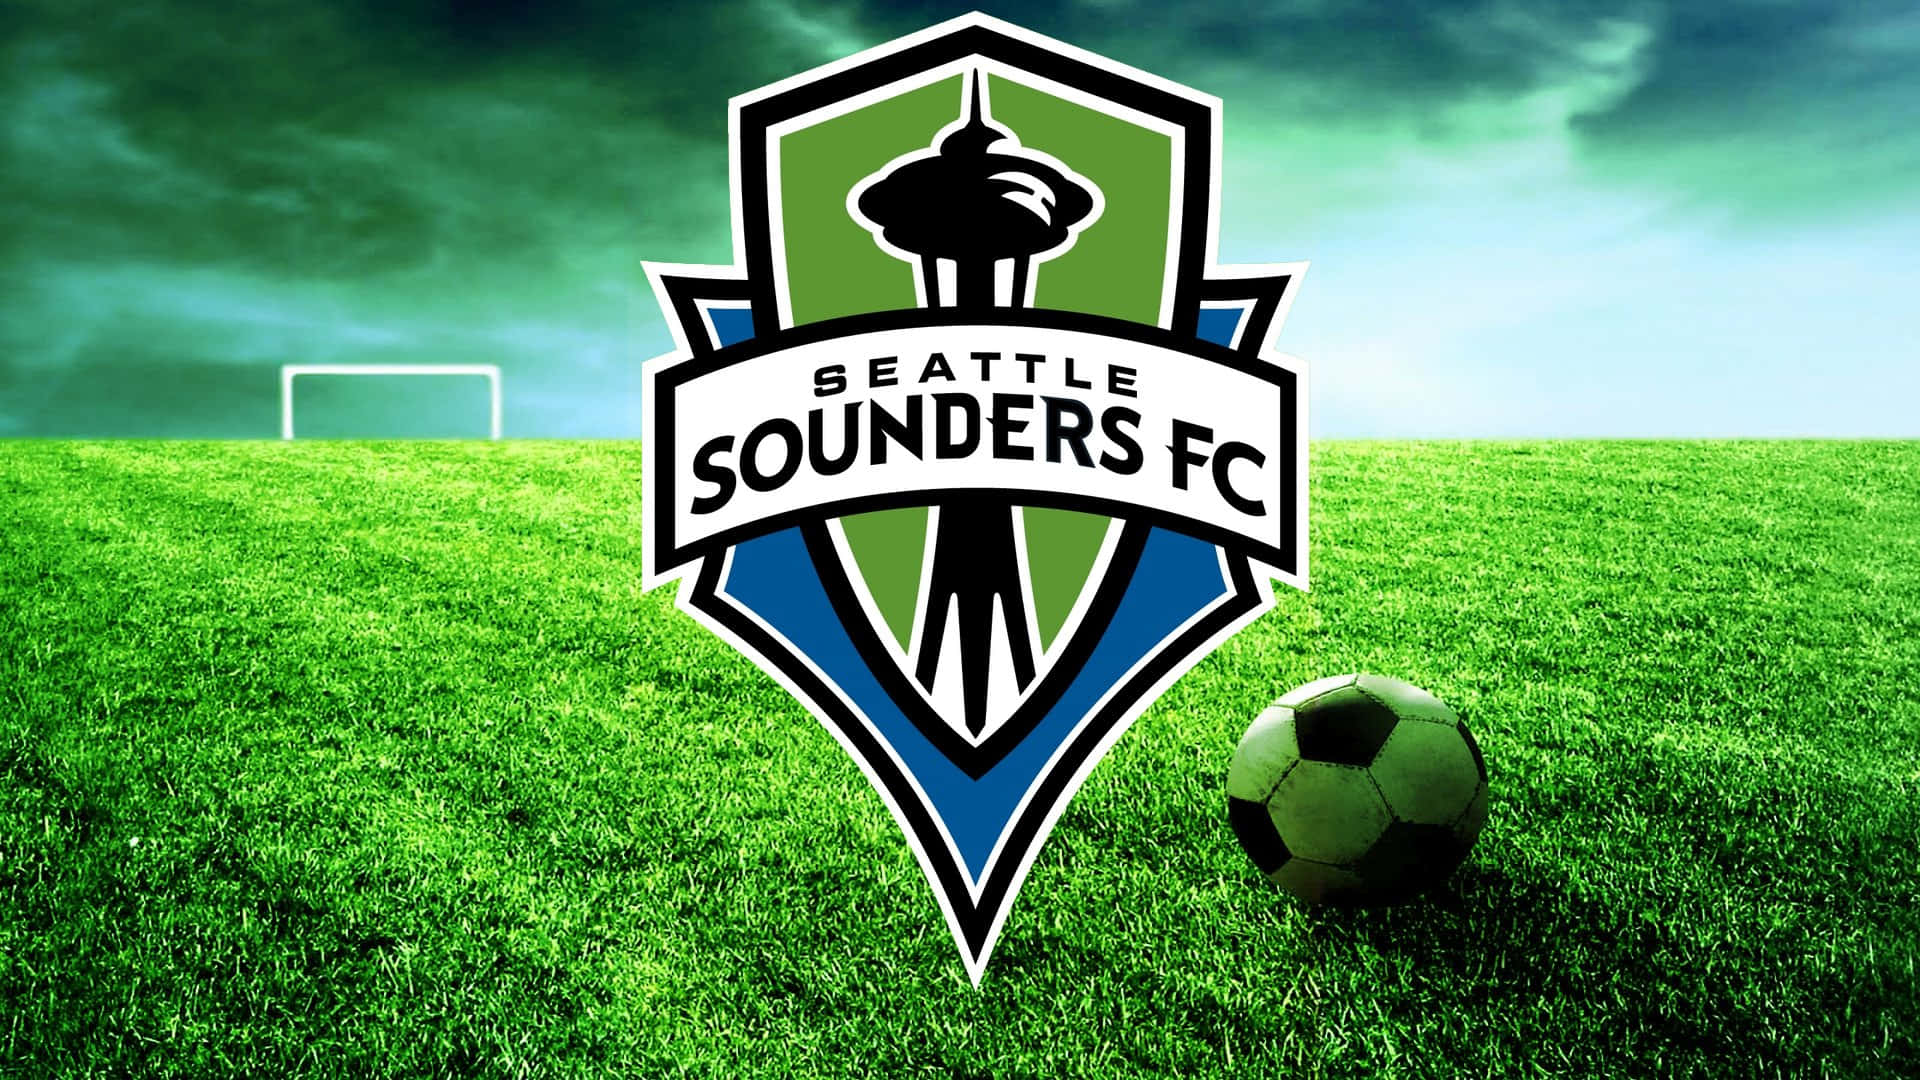 Clubde Fútbol Americano Seattle Sounders Fc. Fondo de pantalla